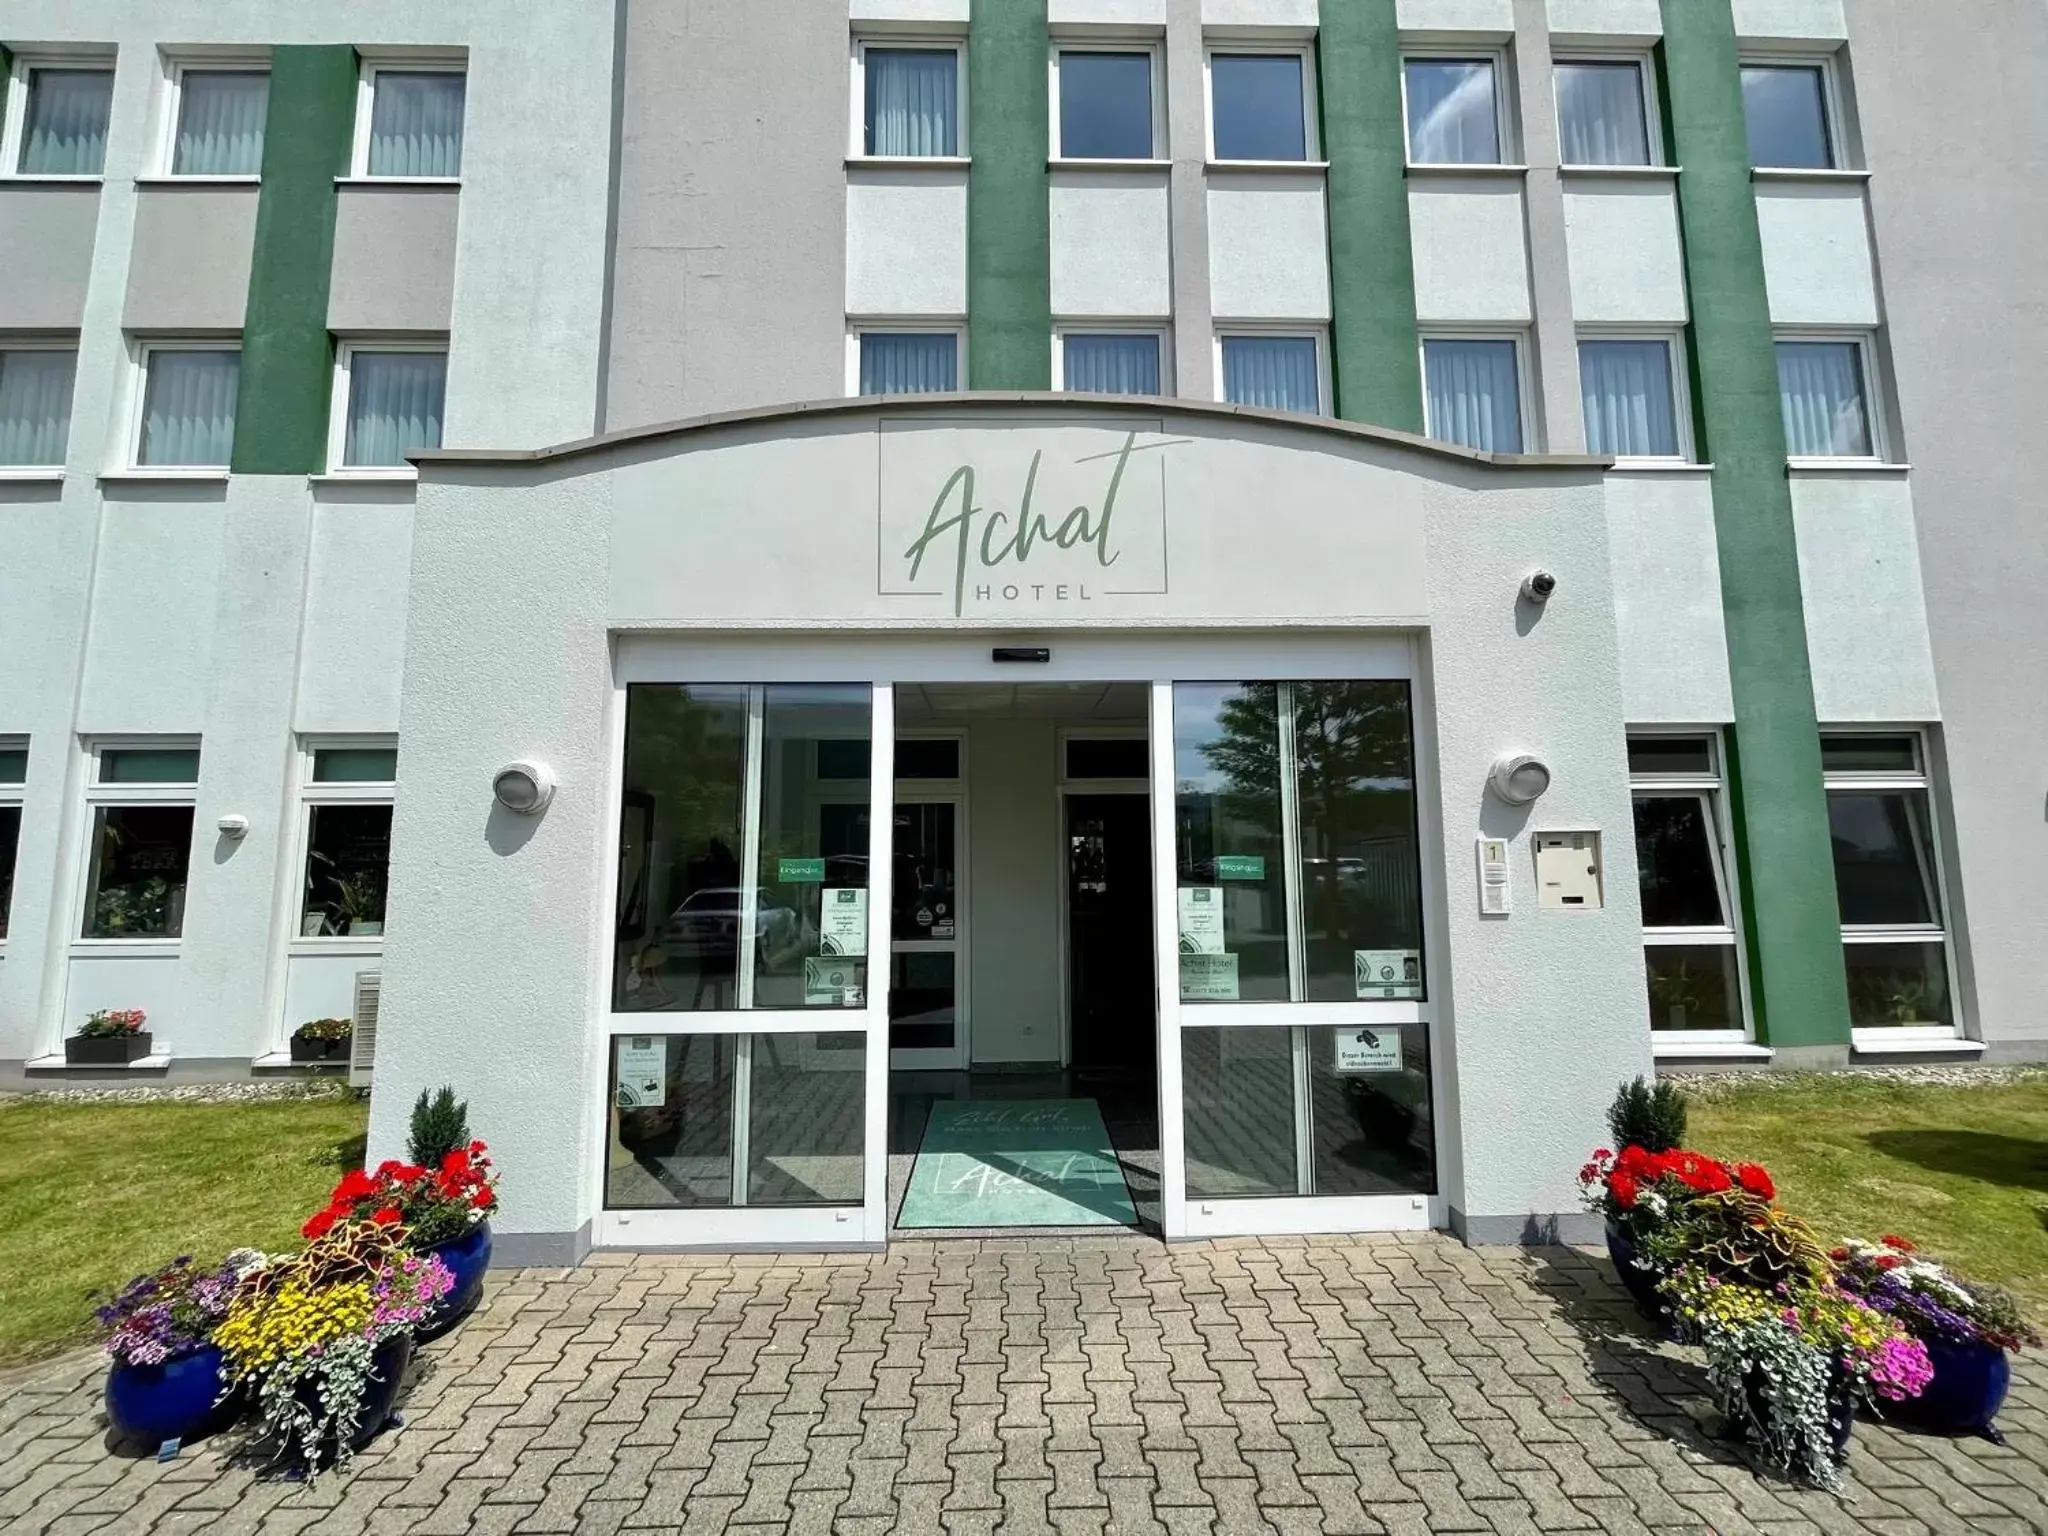 Property building in ACHAT Hotel Monheim am Rhein